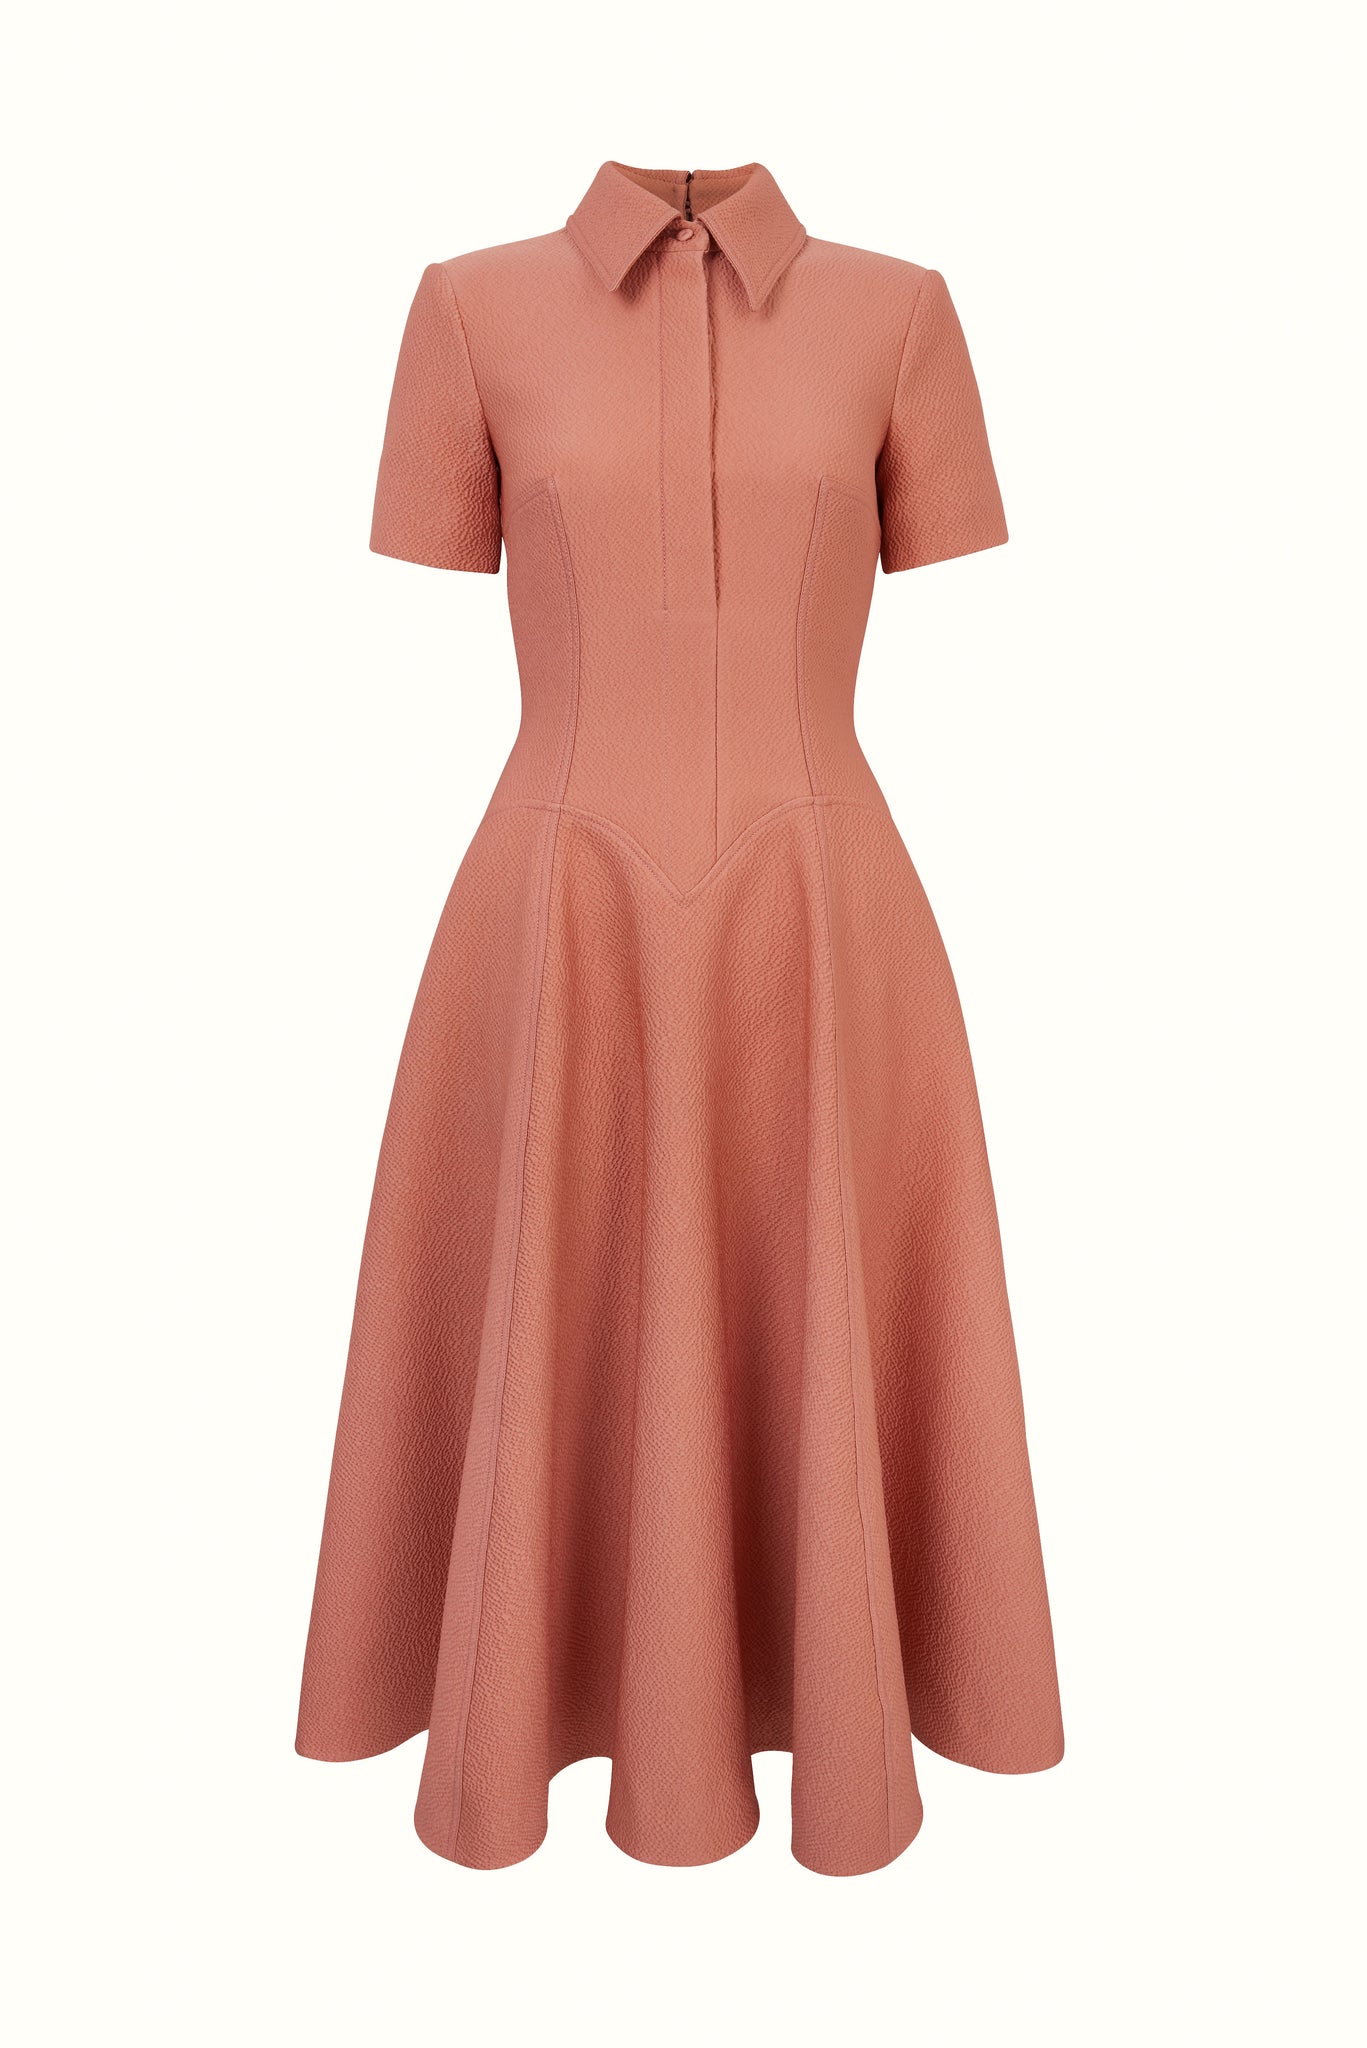 Jody Dress In Dust Pink Cloque | Emilia Wickstead